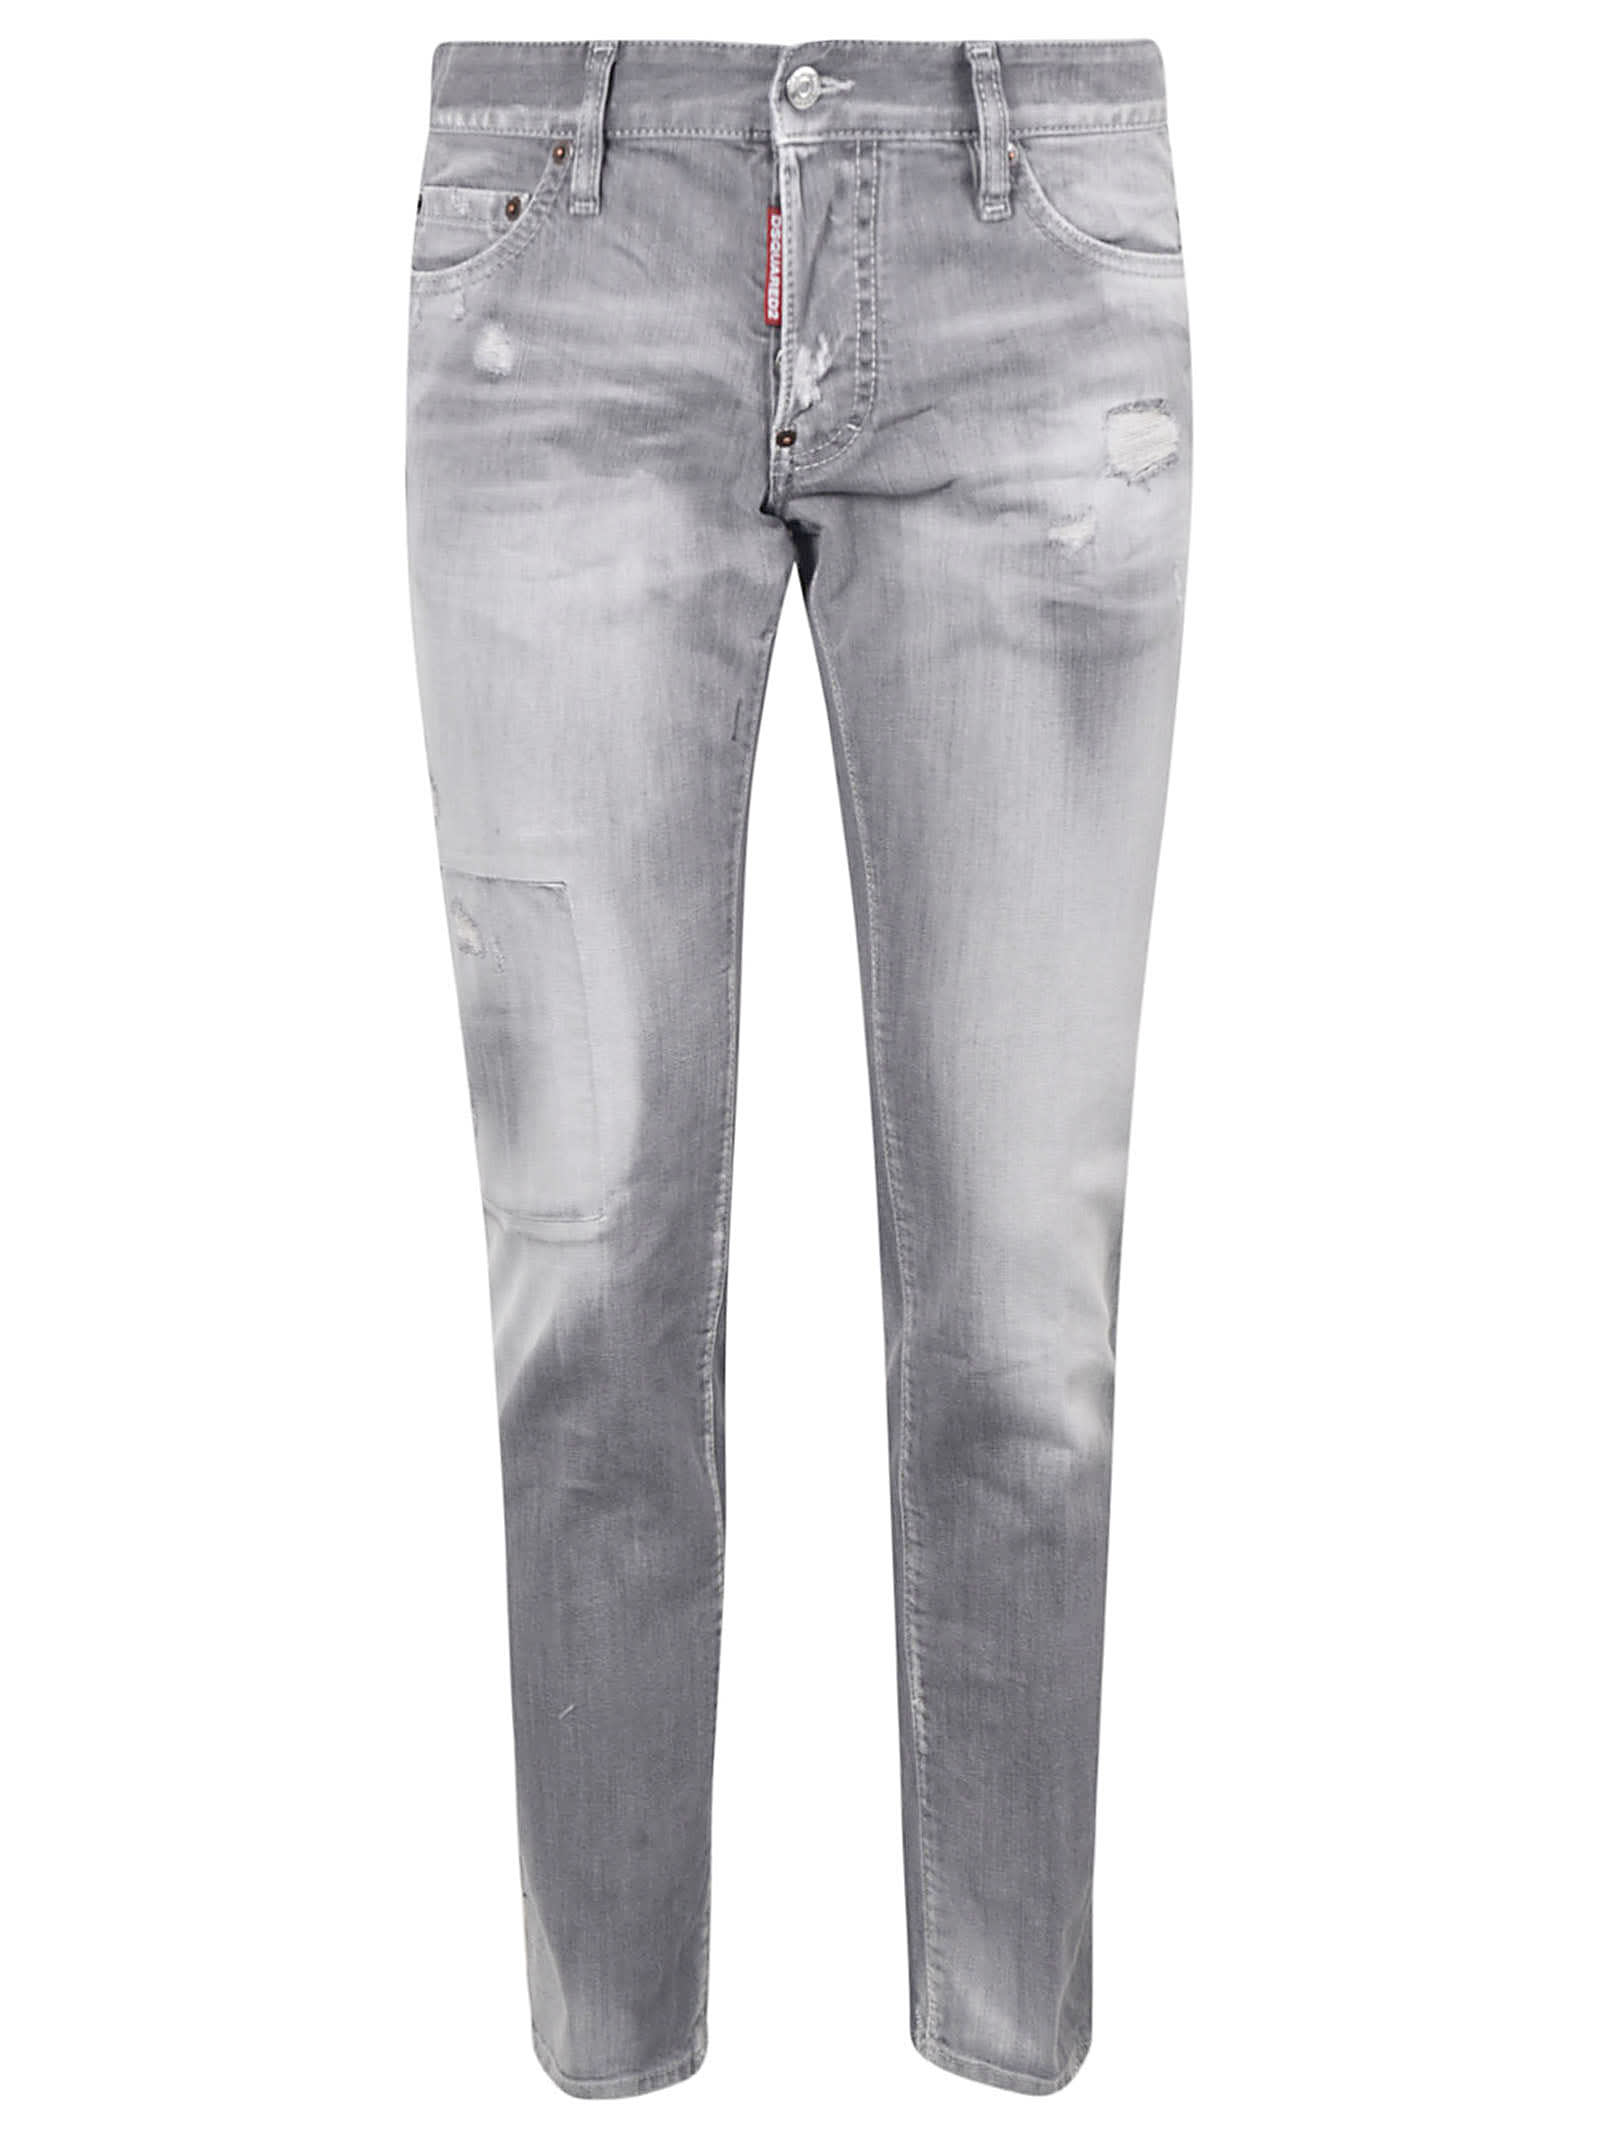 dsquared2 jeans grey sale